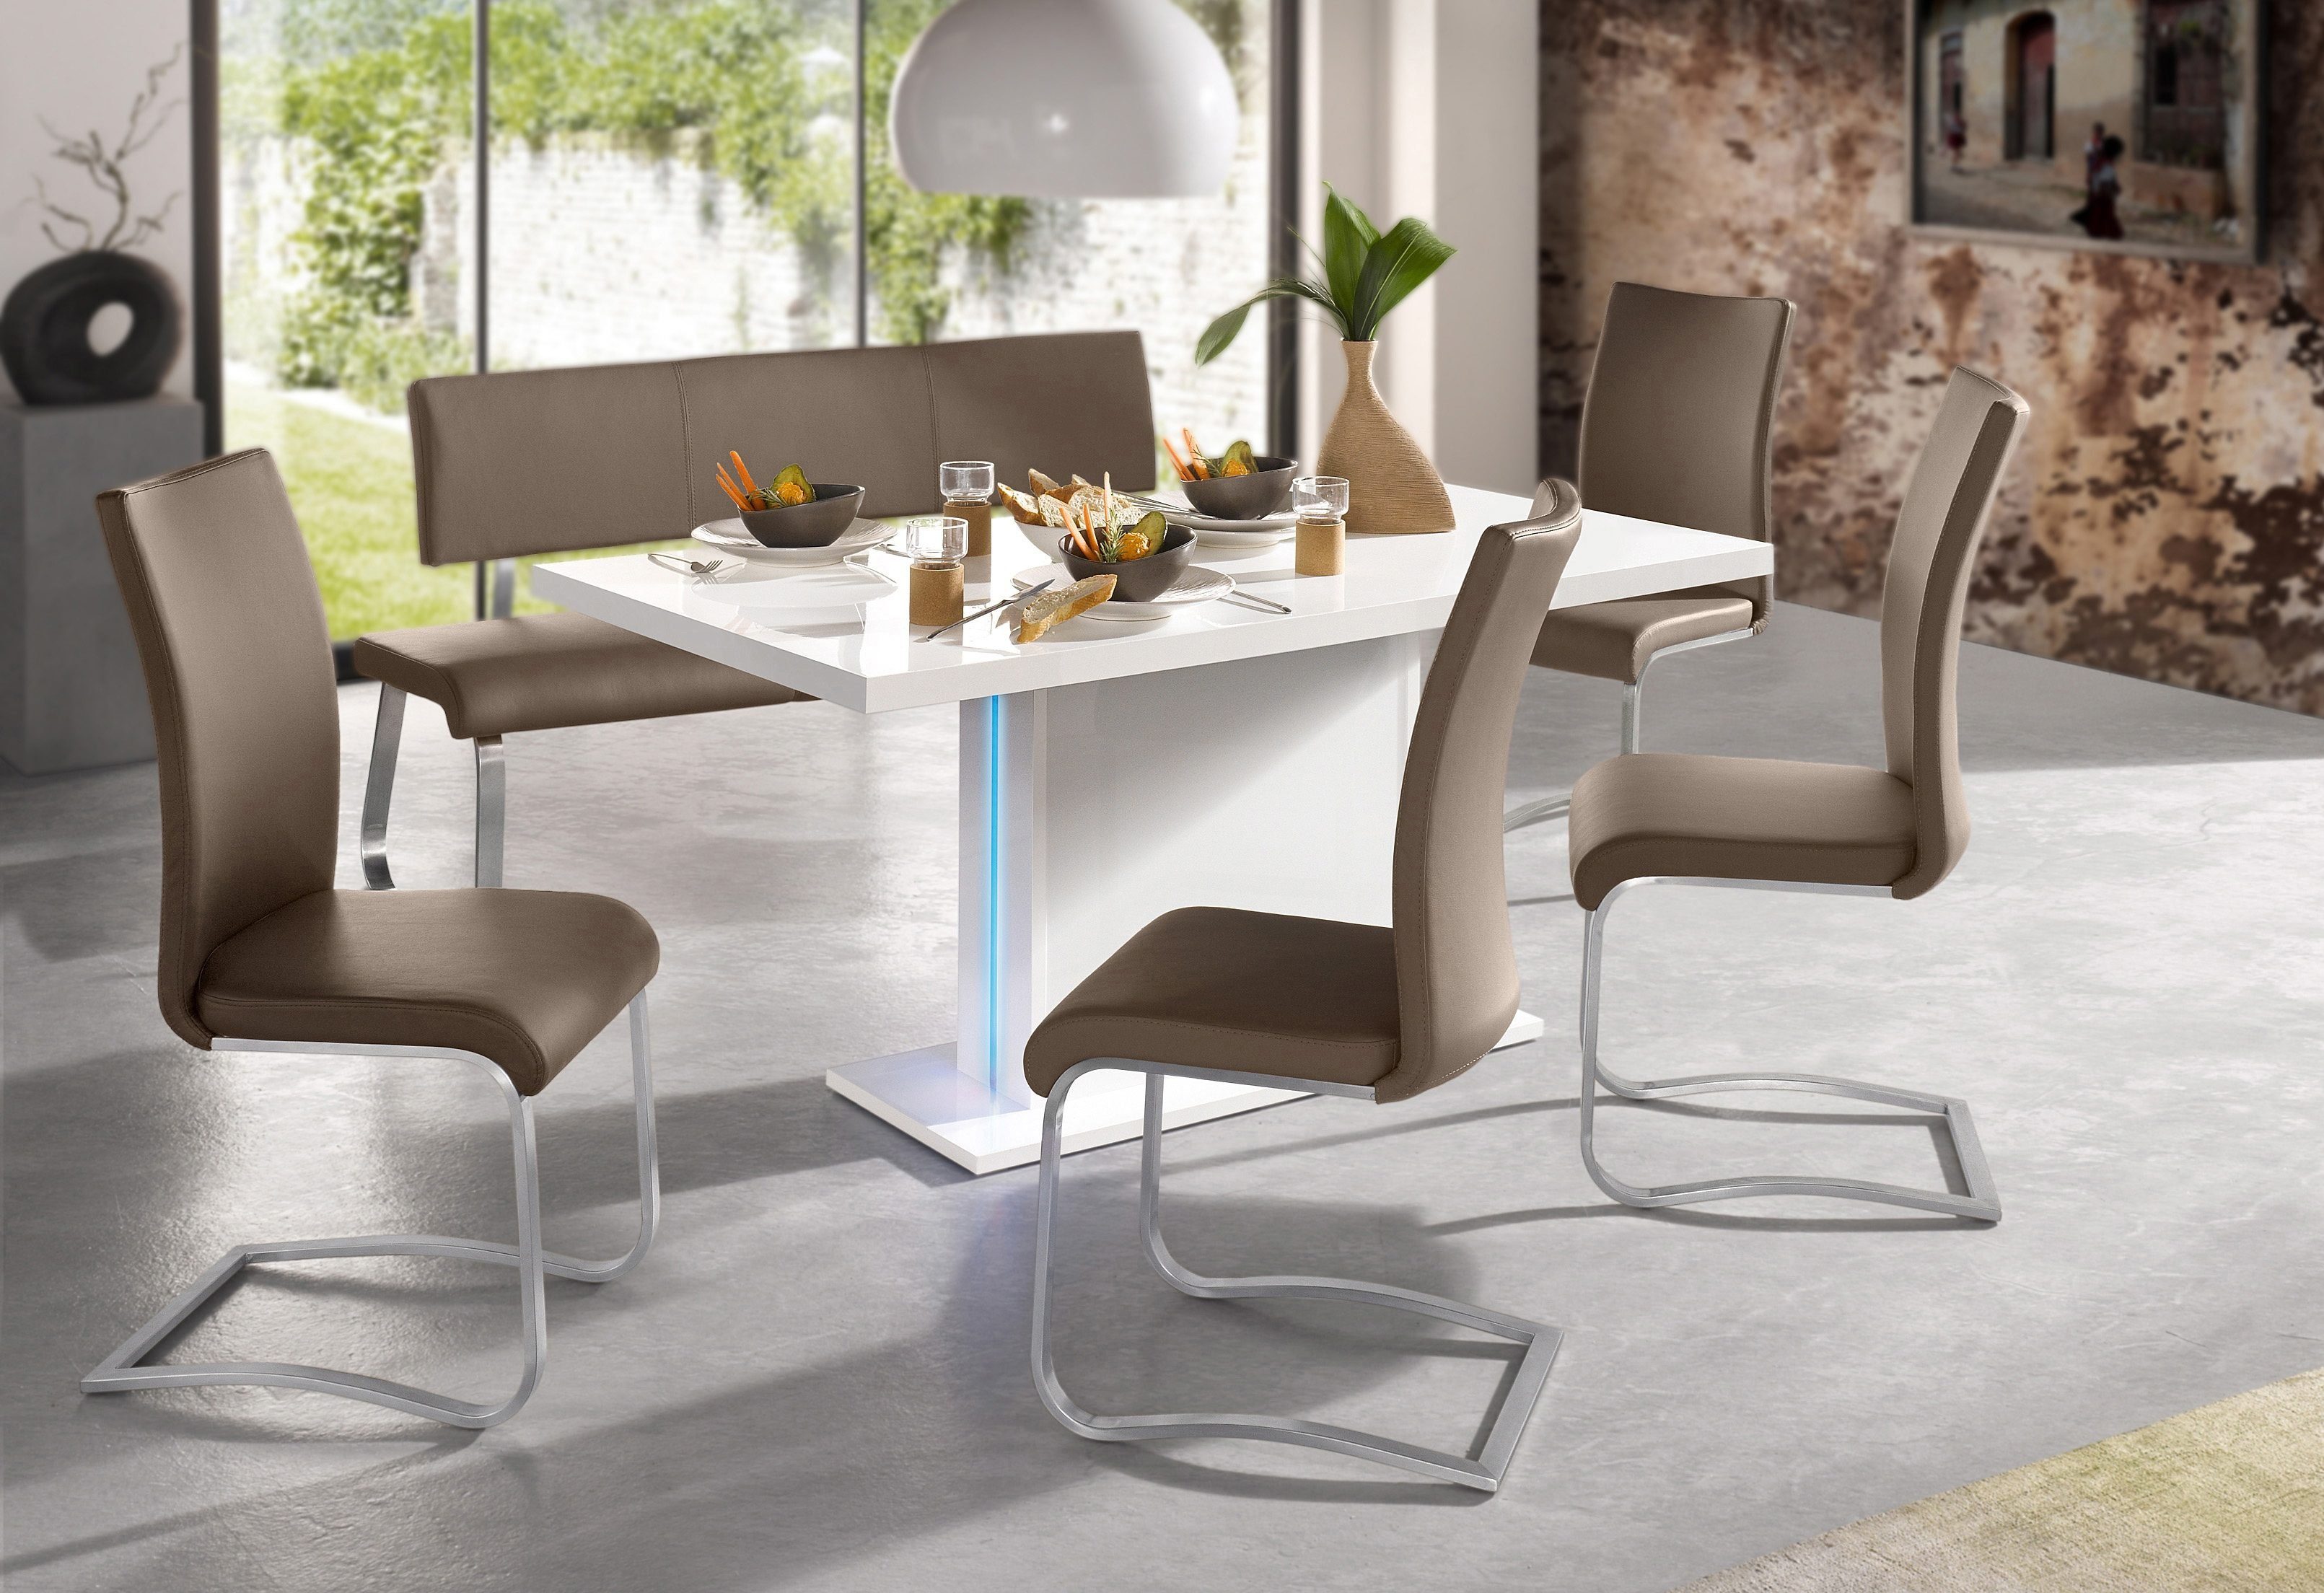 Arco belastbar Cappuccino bis Kg (Set, furniture Stuhl St), Echtlederbezug, | 130 MCA mit 2 Cappuccino Freischwinger